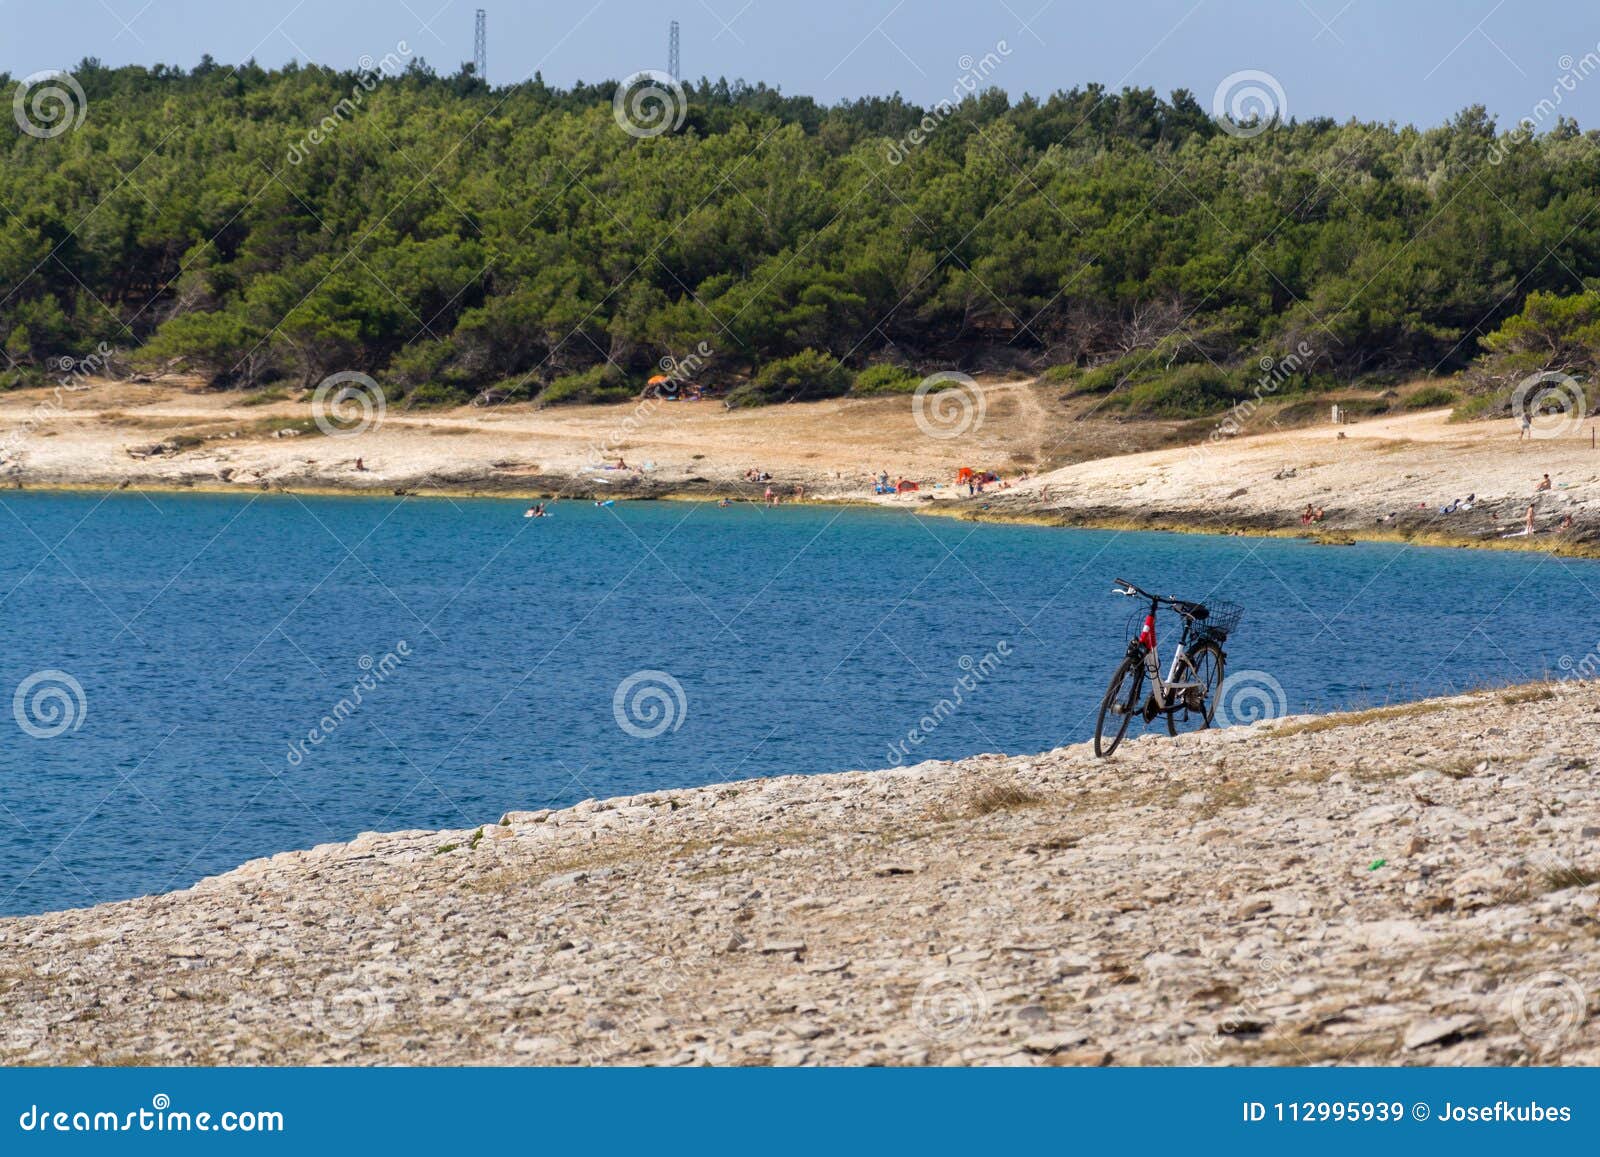 bicycle on stony beach, kamenjak peninsula, adriatic sea, premantura, croatia